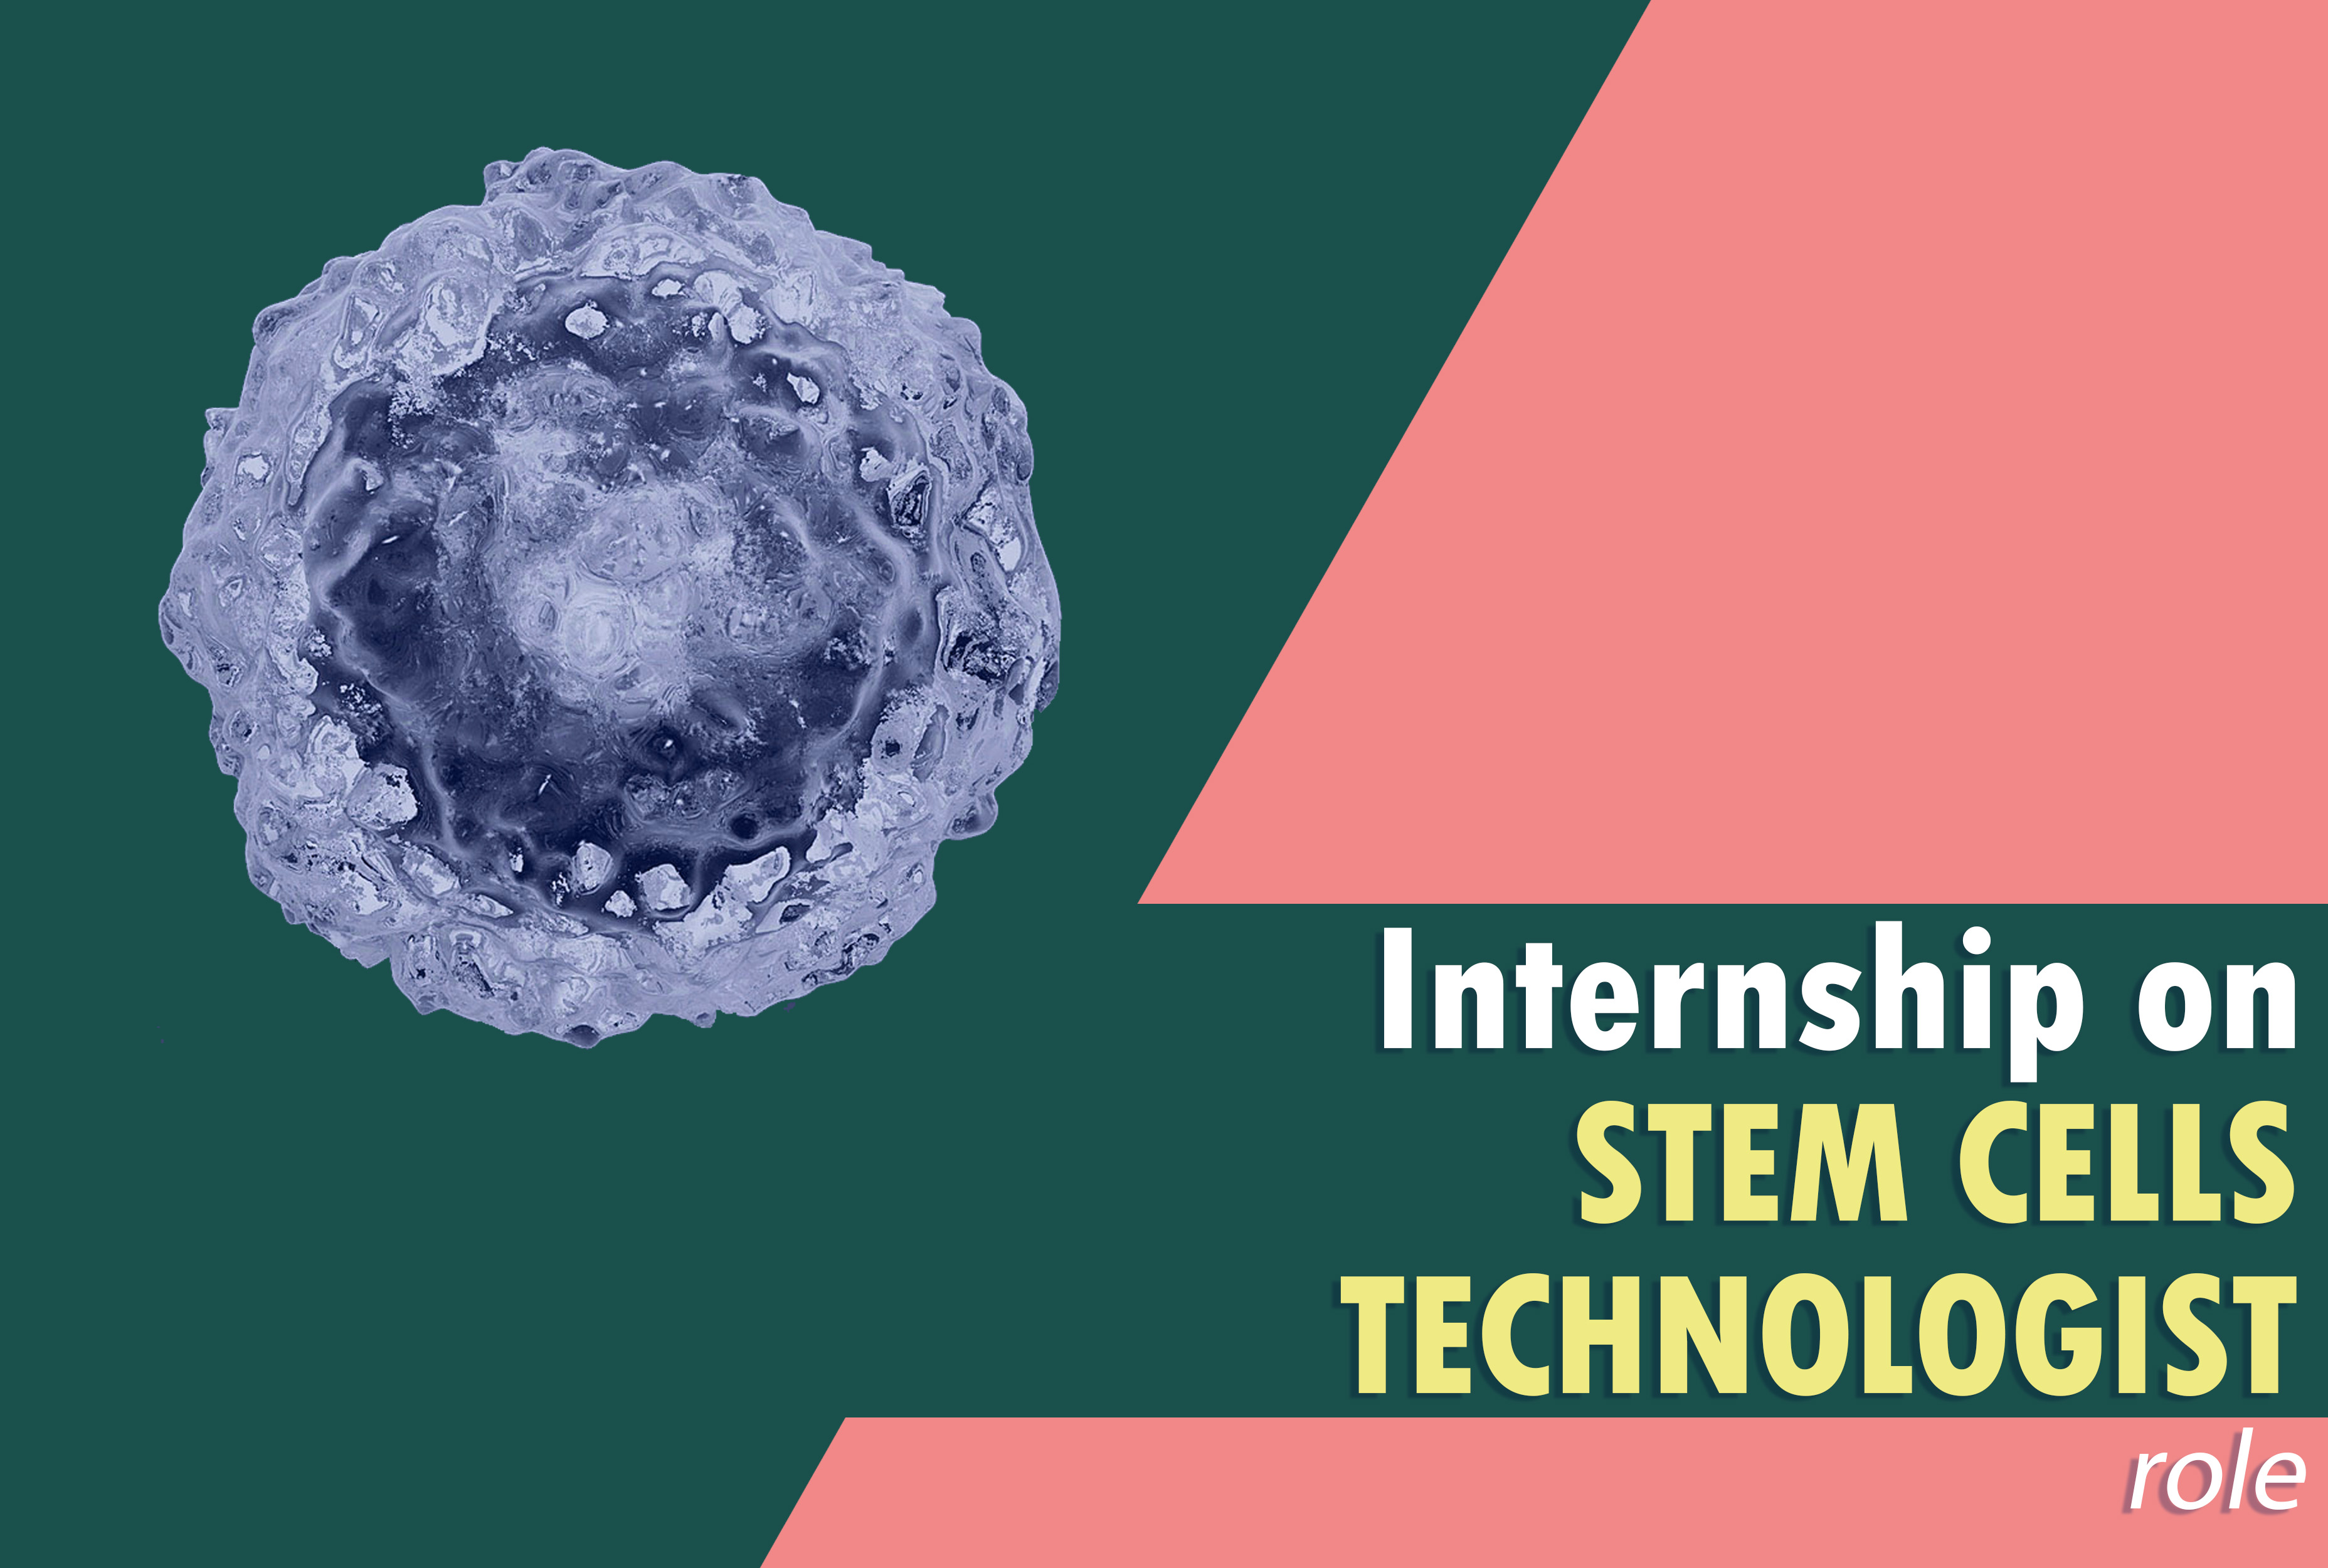 Internship on stem cells technologist role